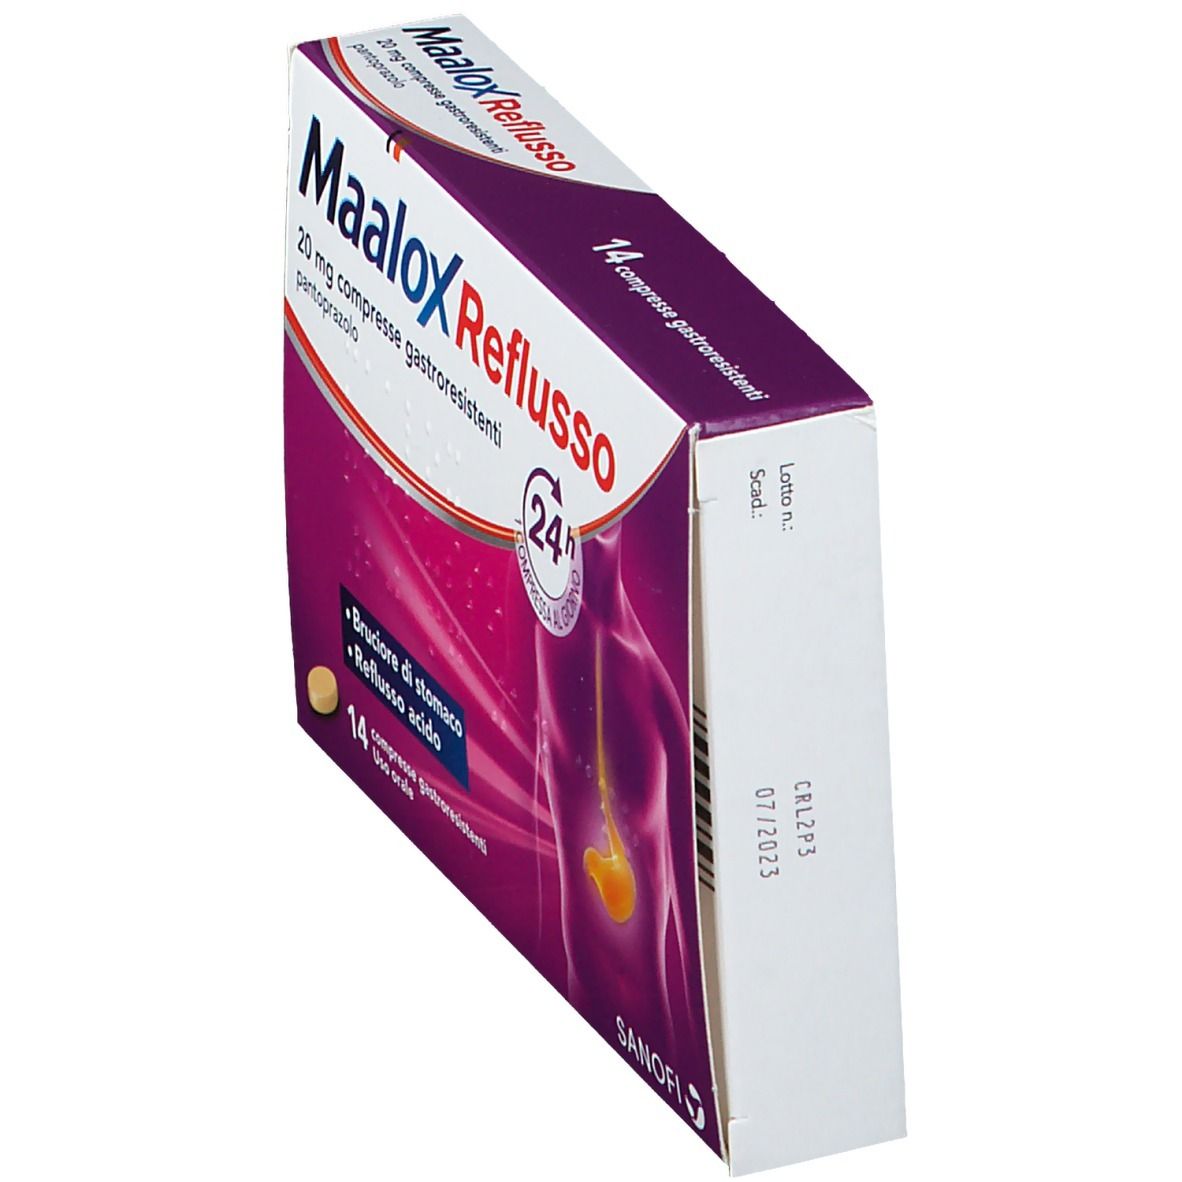 Maalox Reflusso 20 mg Compresse gastroresistenti